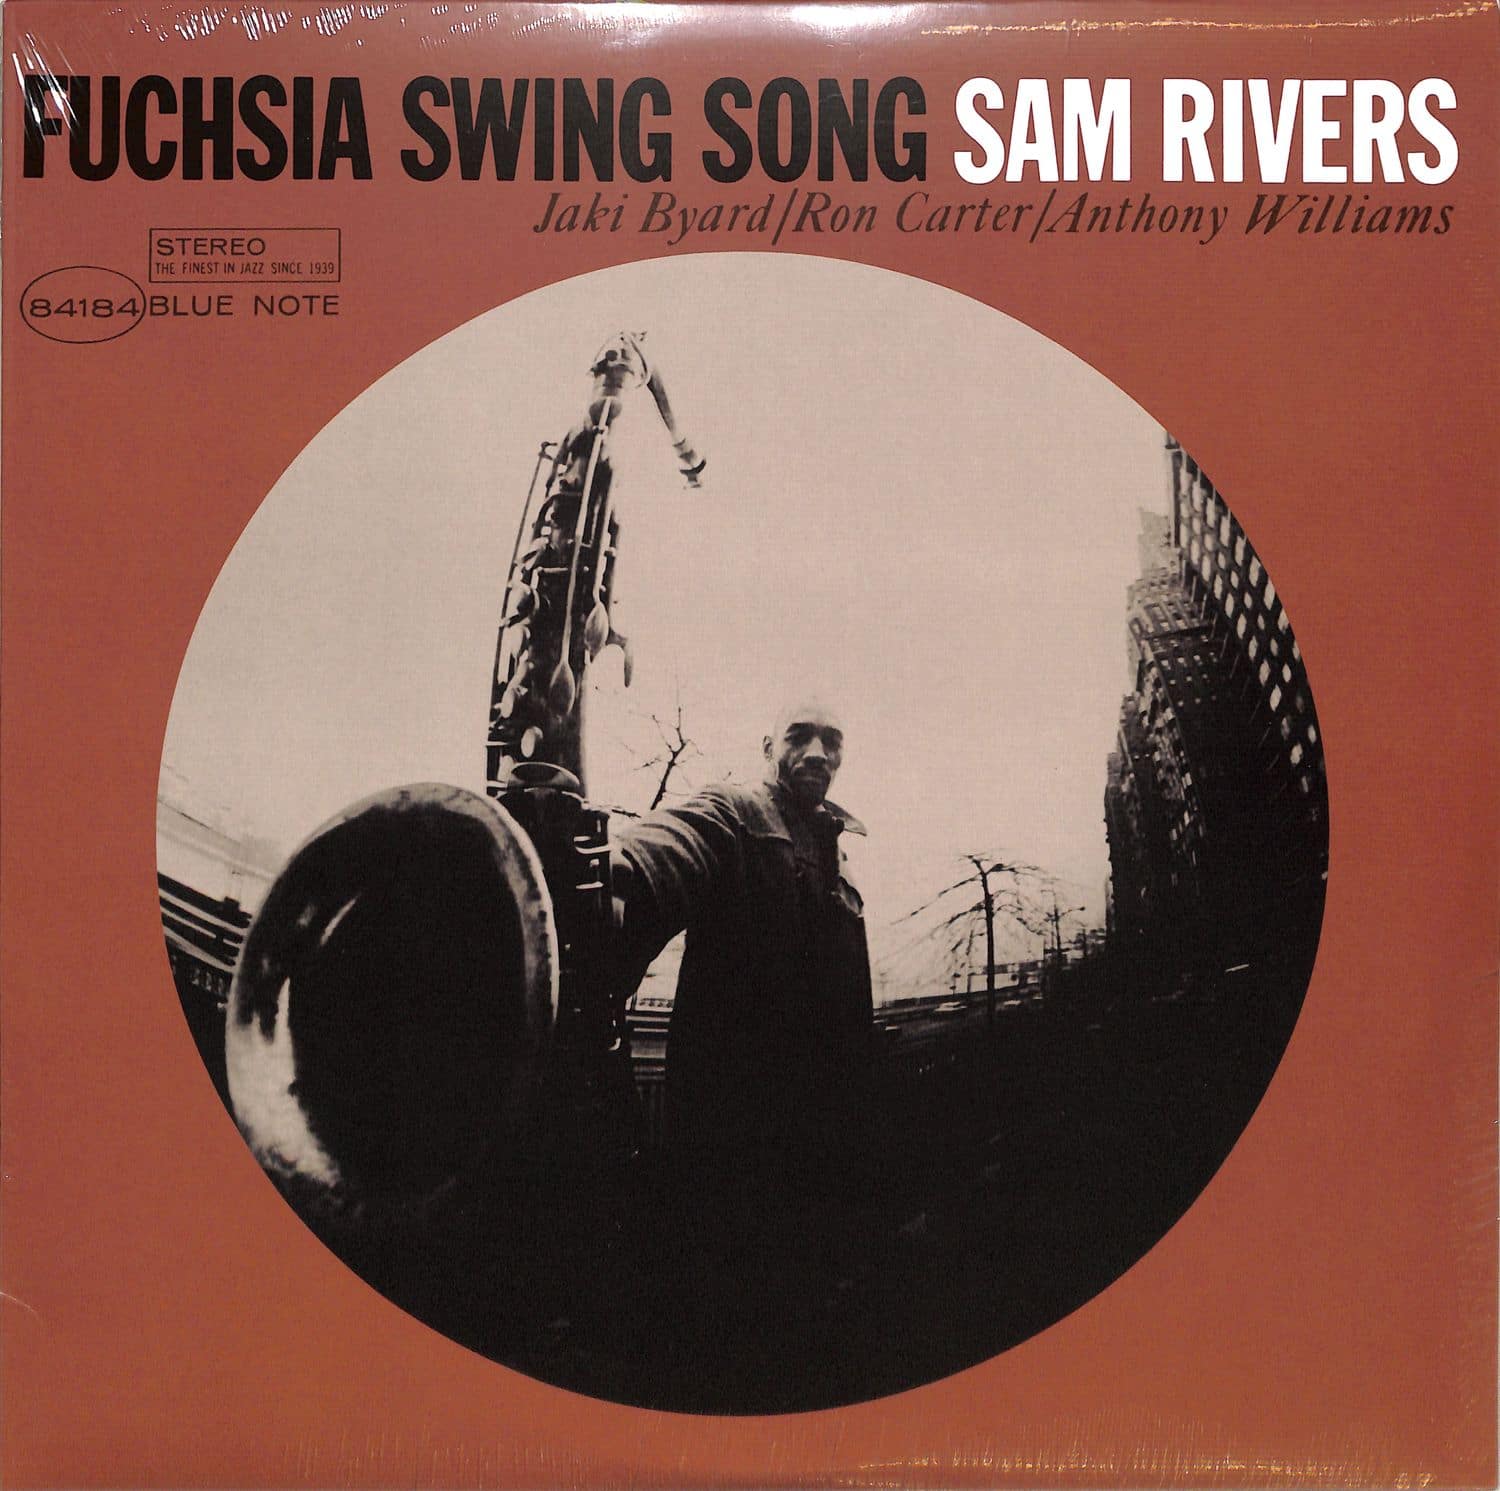 Sam Rivers - FUCHSIA SWING SONG 